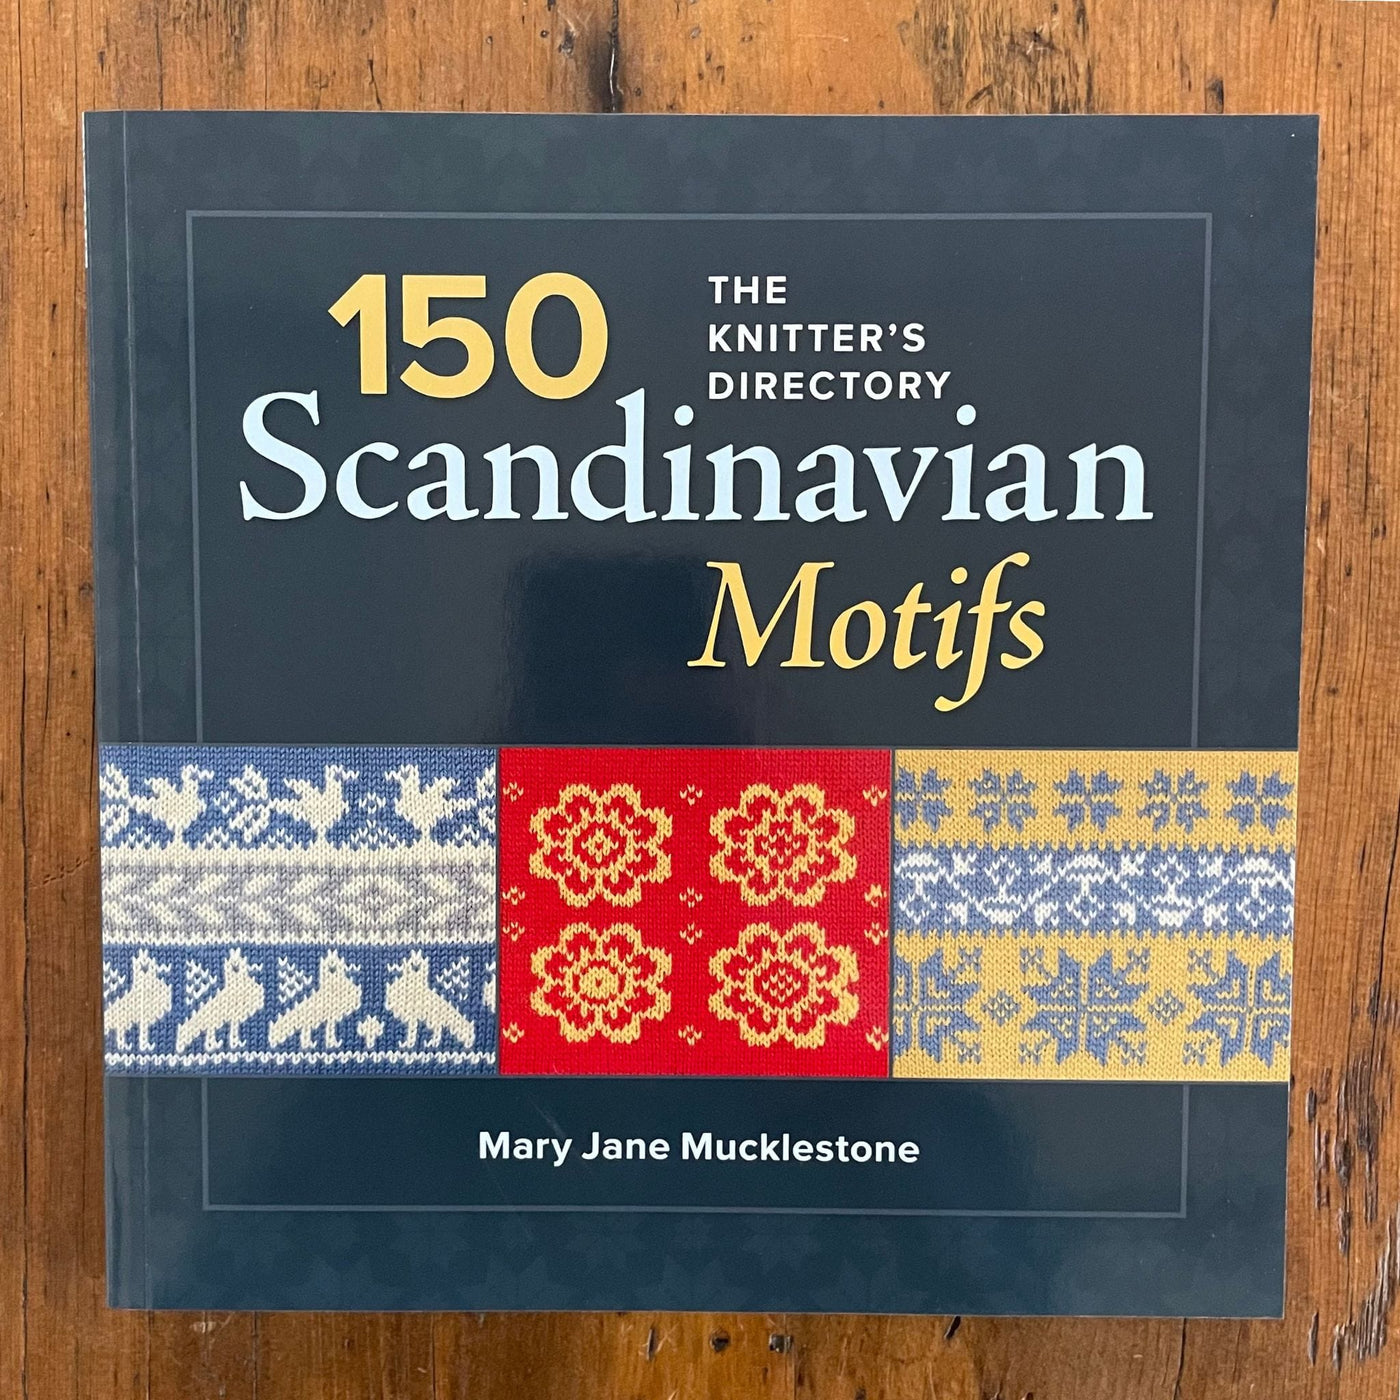 150 Scandinavian Motifs by Mary Jane Mucklestone